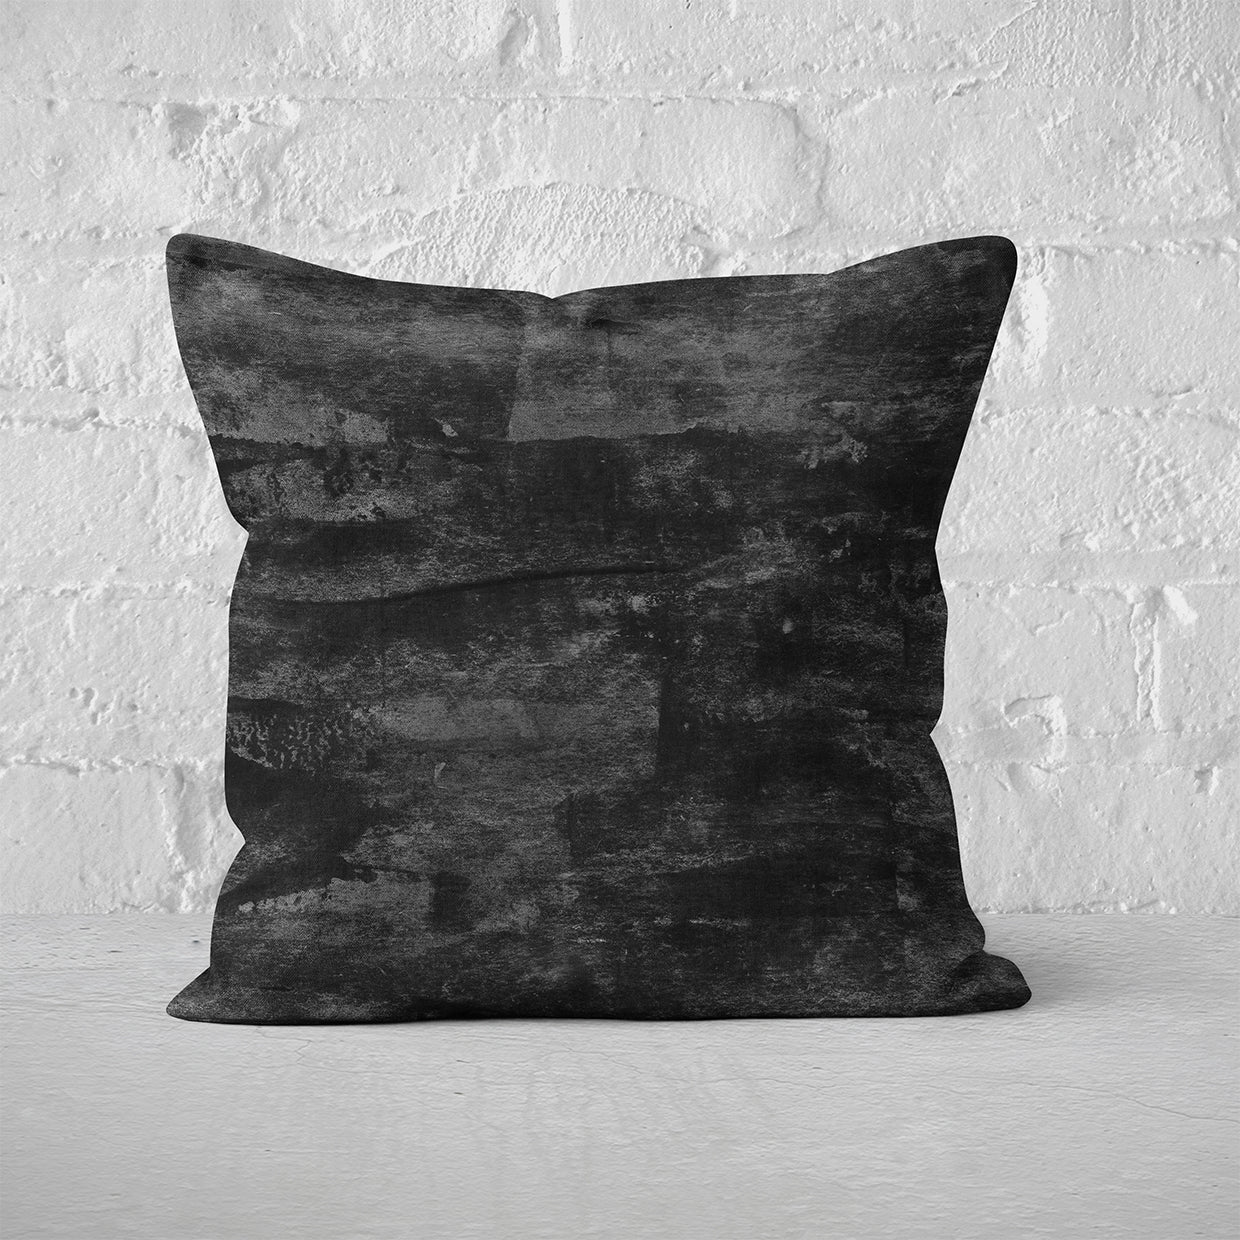 Pillow Cover Art Feature 'Satellite' - Black & White - Cotton Twill